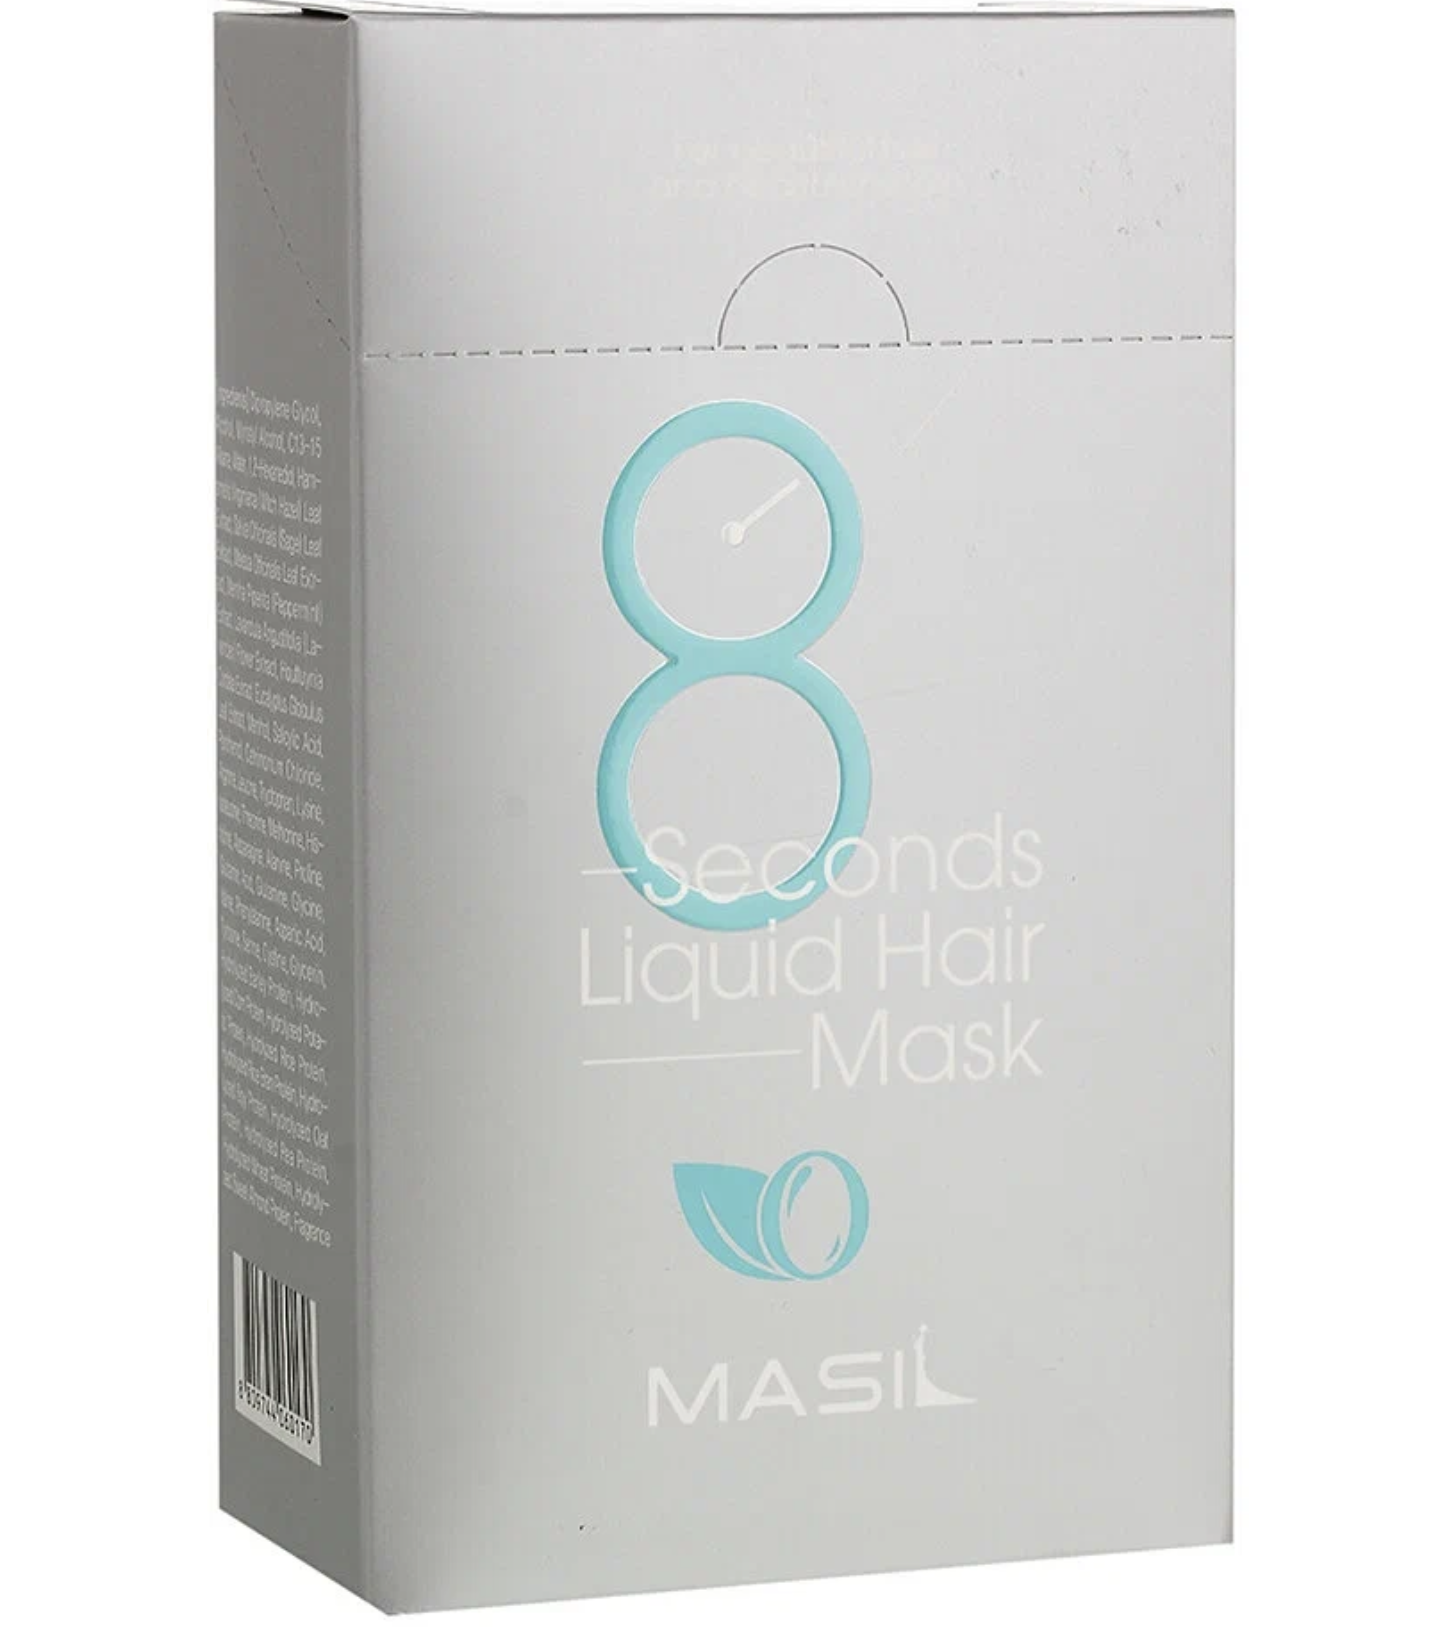   / Masil - -     8 Seconds Liquid Hair Mask 208 